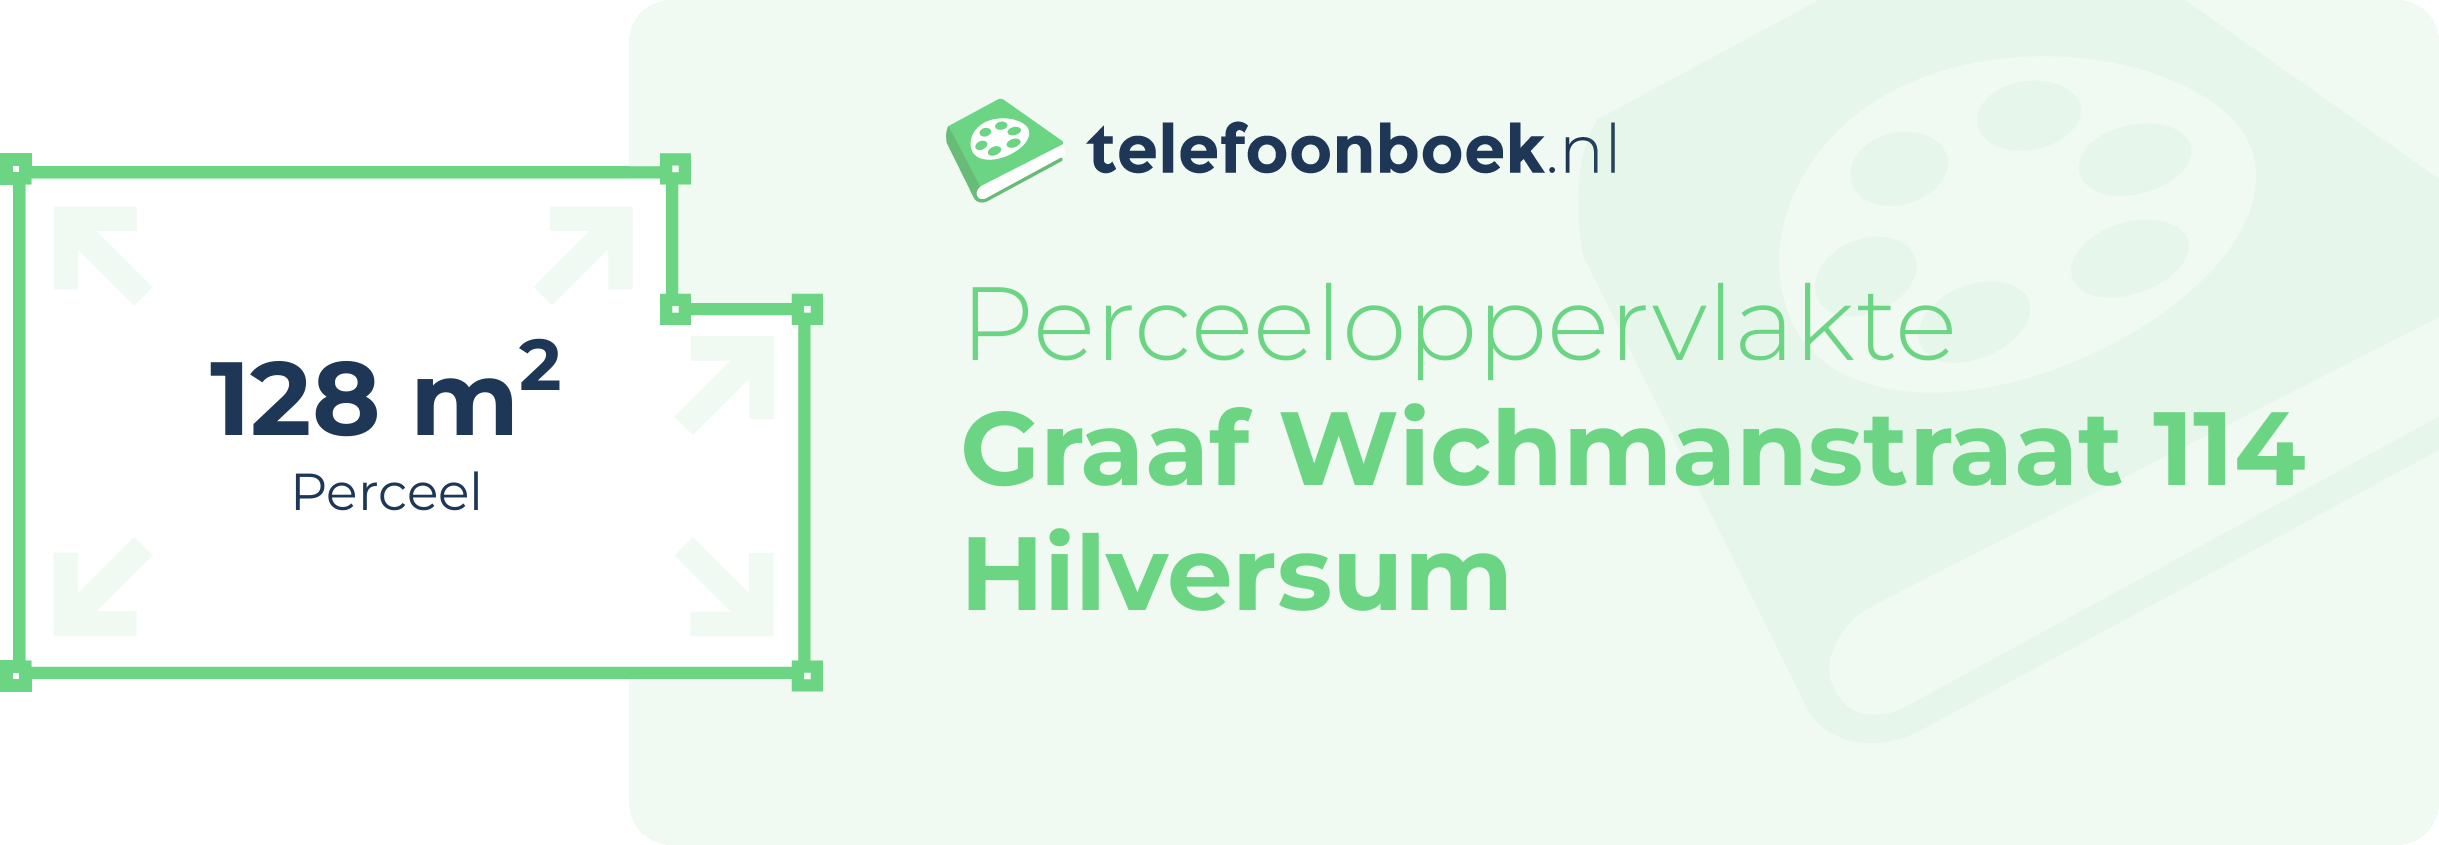 Perceeloppervlakte Graaf Wichmanstraat 114 Hilversum